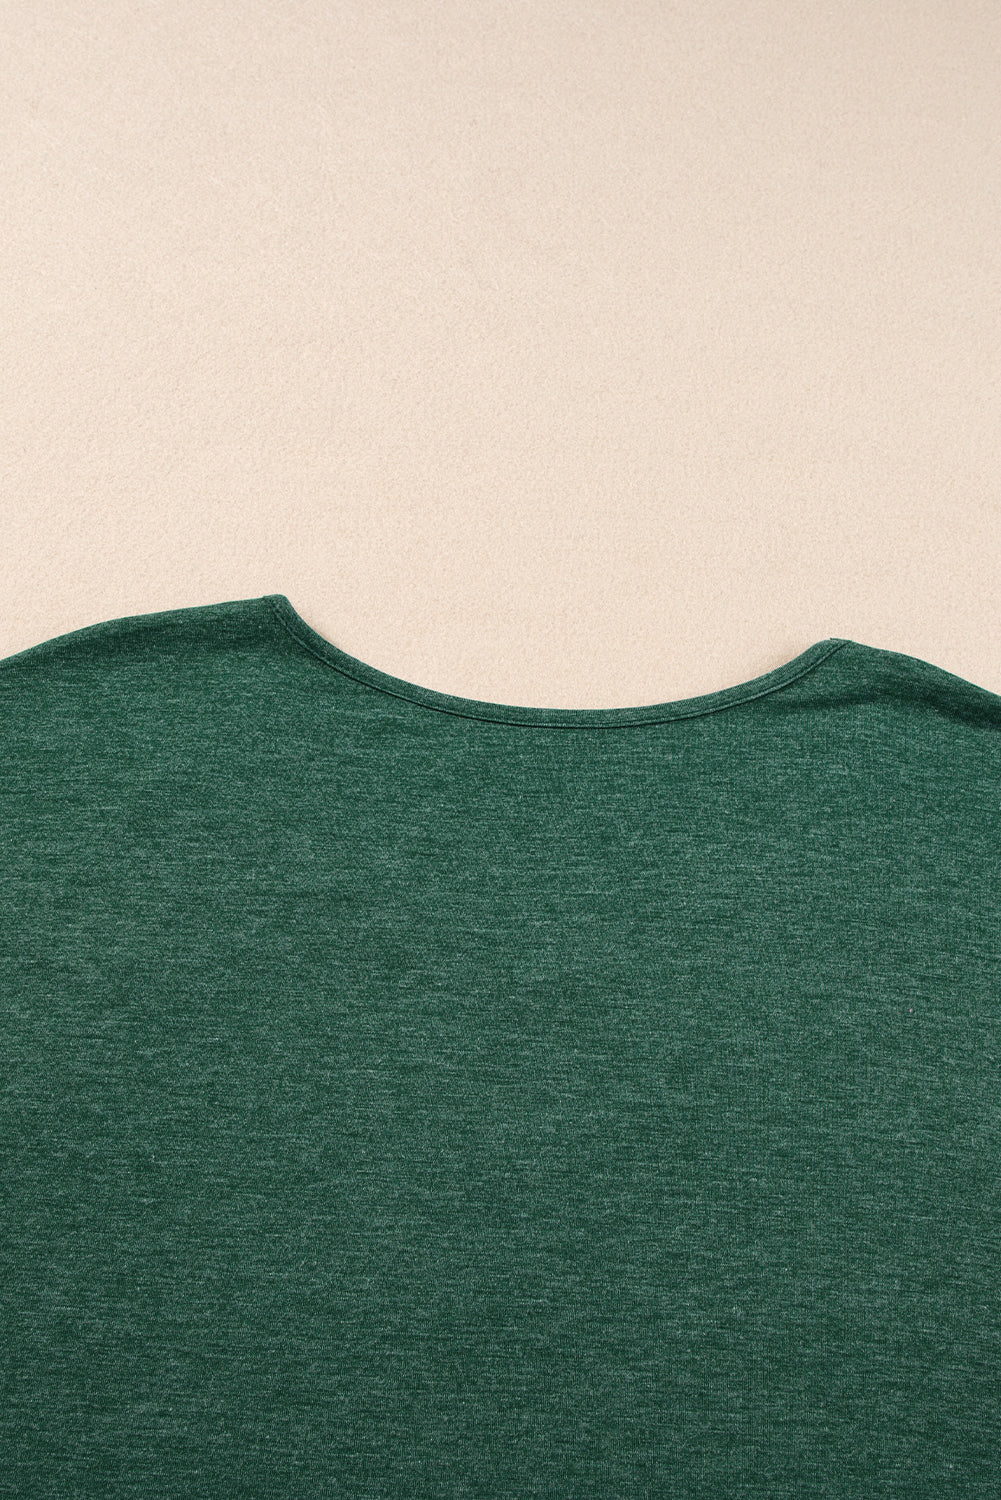 Schwarzgrünes, übergroßes T-Shirt mit Häkelspitze